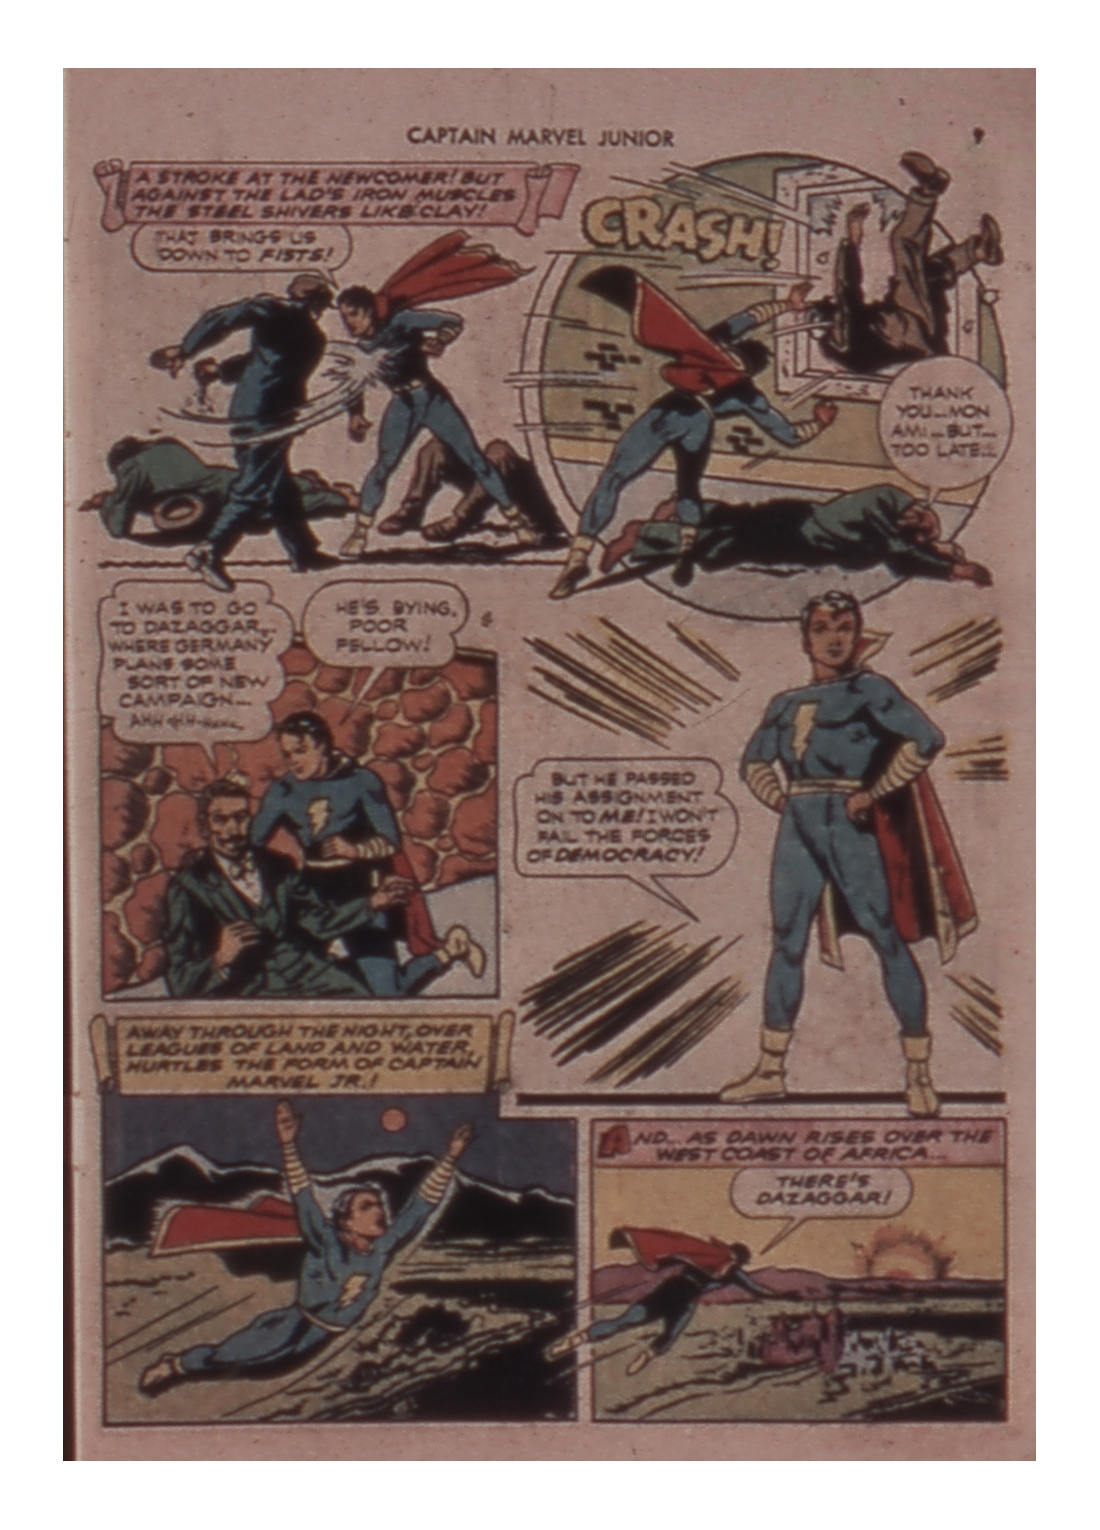 Read online Captain Marvel, Jr. comic -  Issue #1 - 9